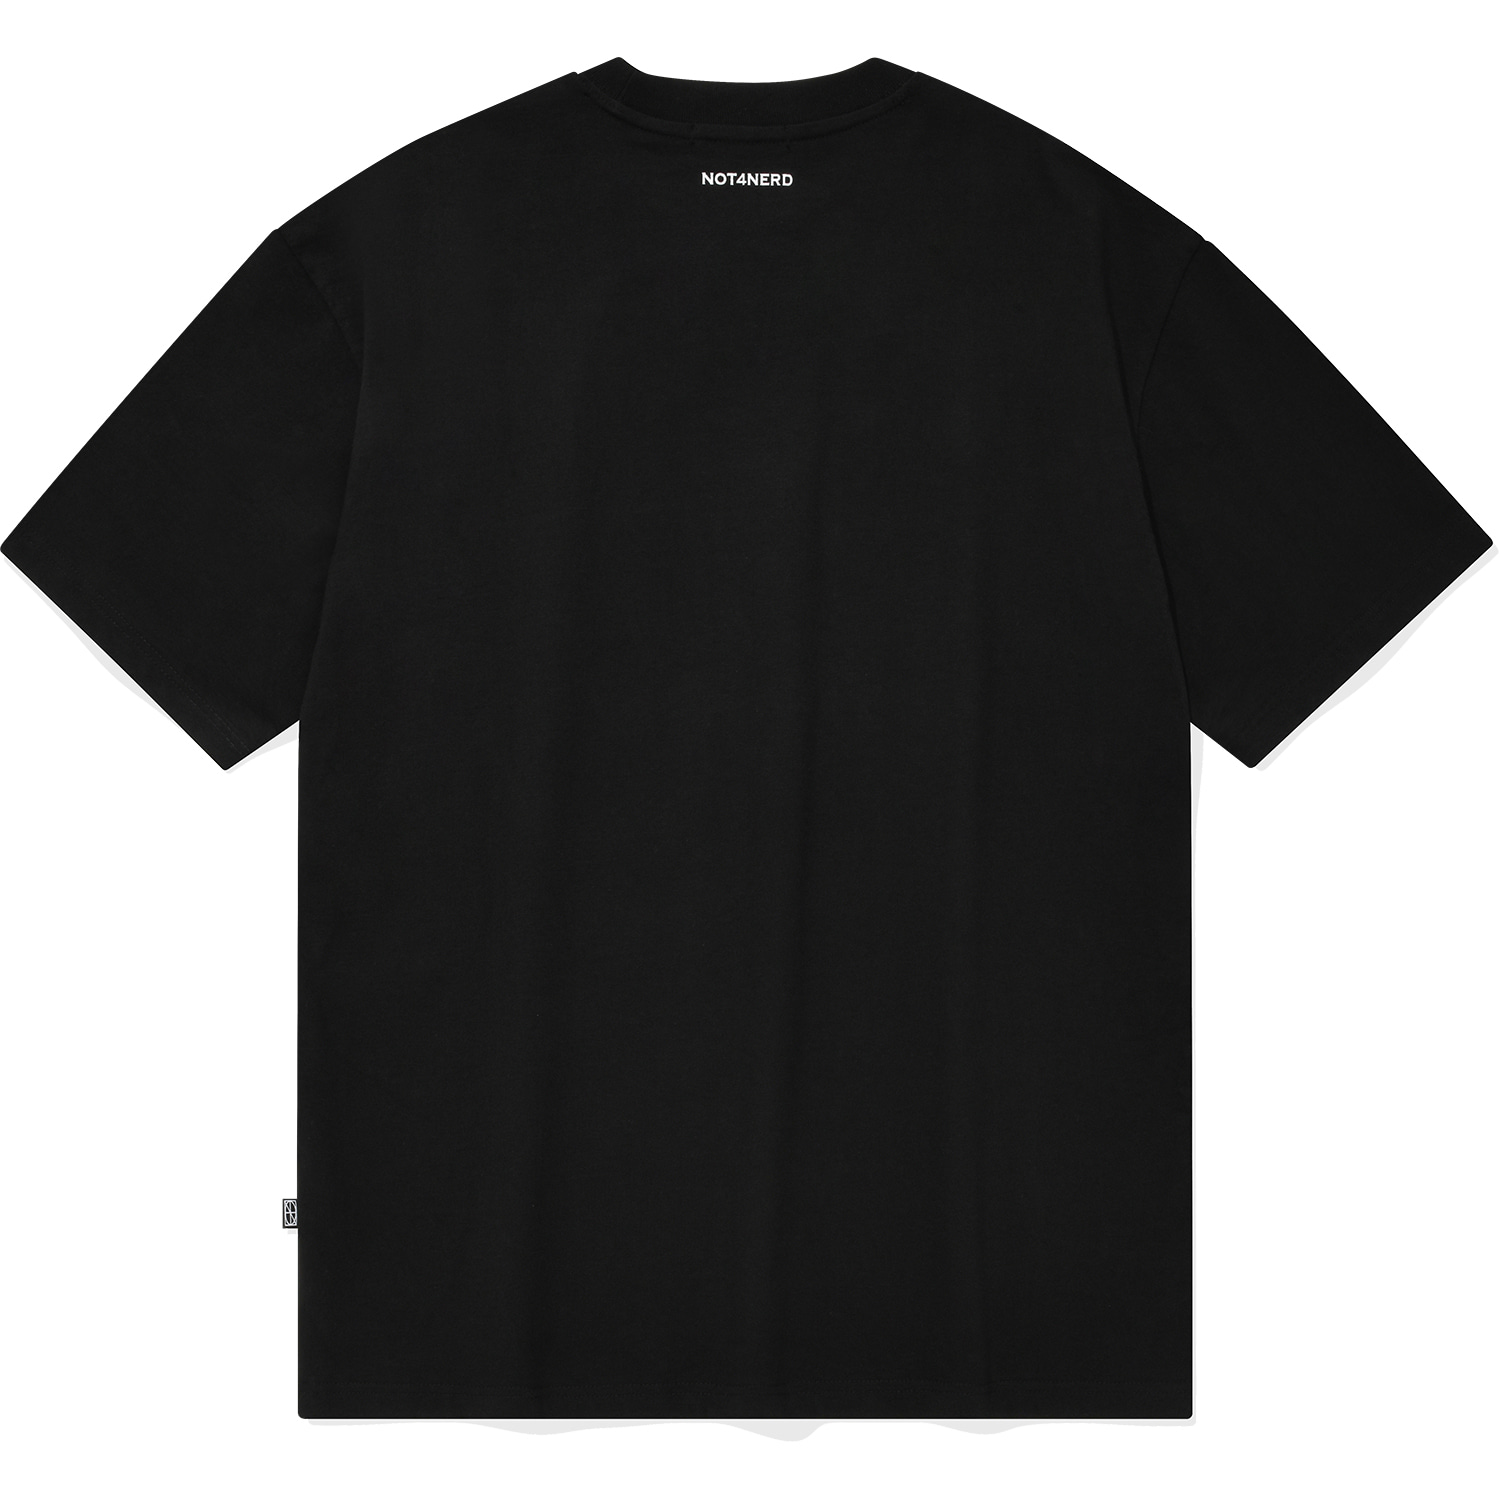 Nuclear T-Shirts Black,NOT4NERD